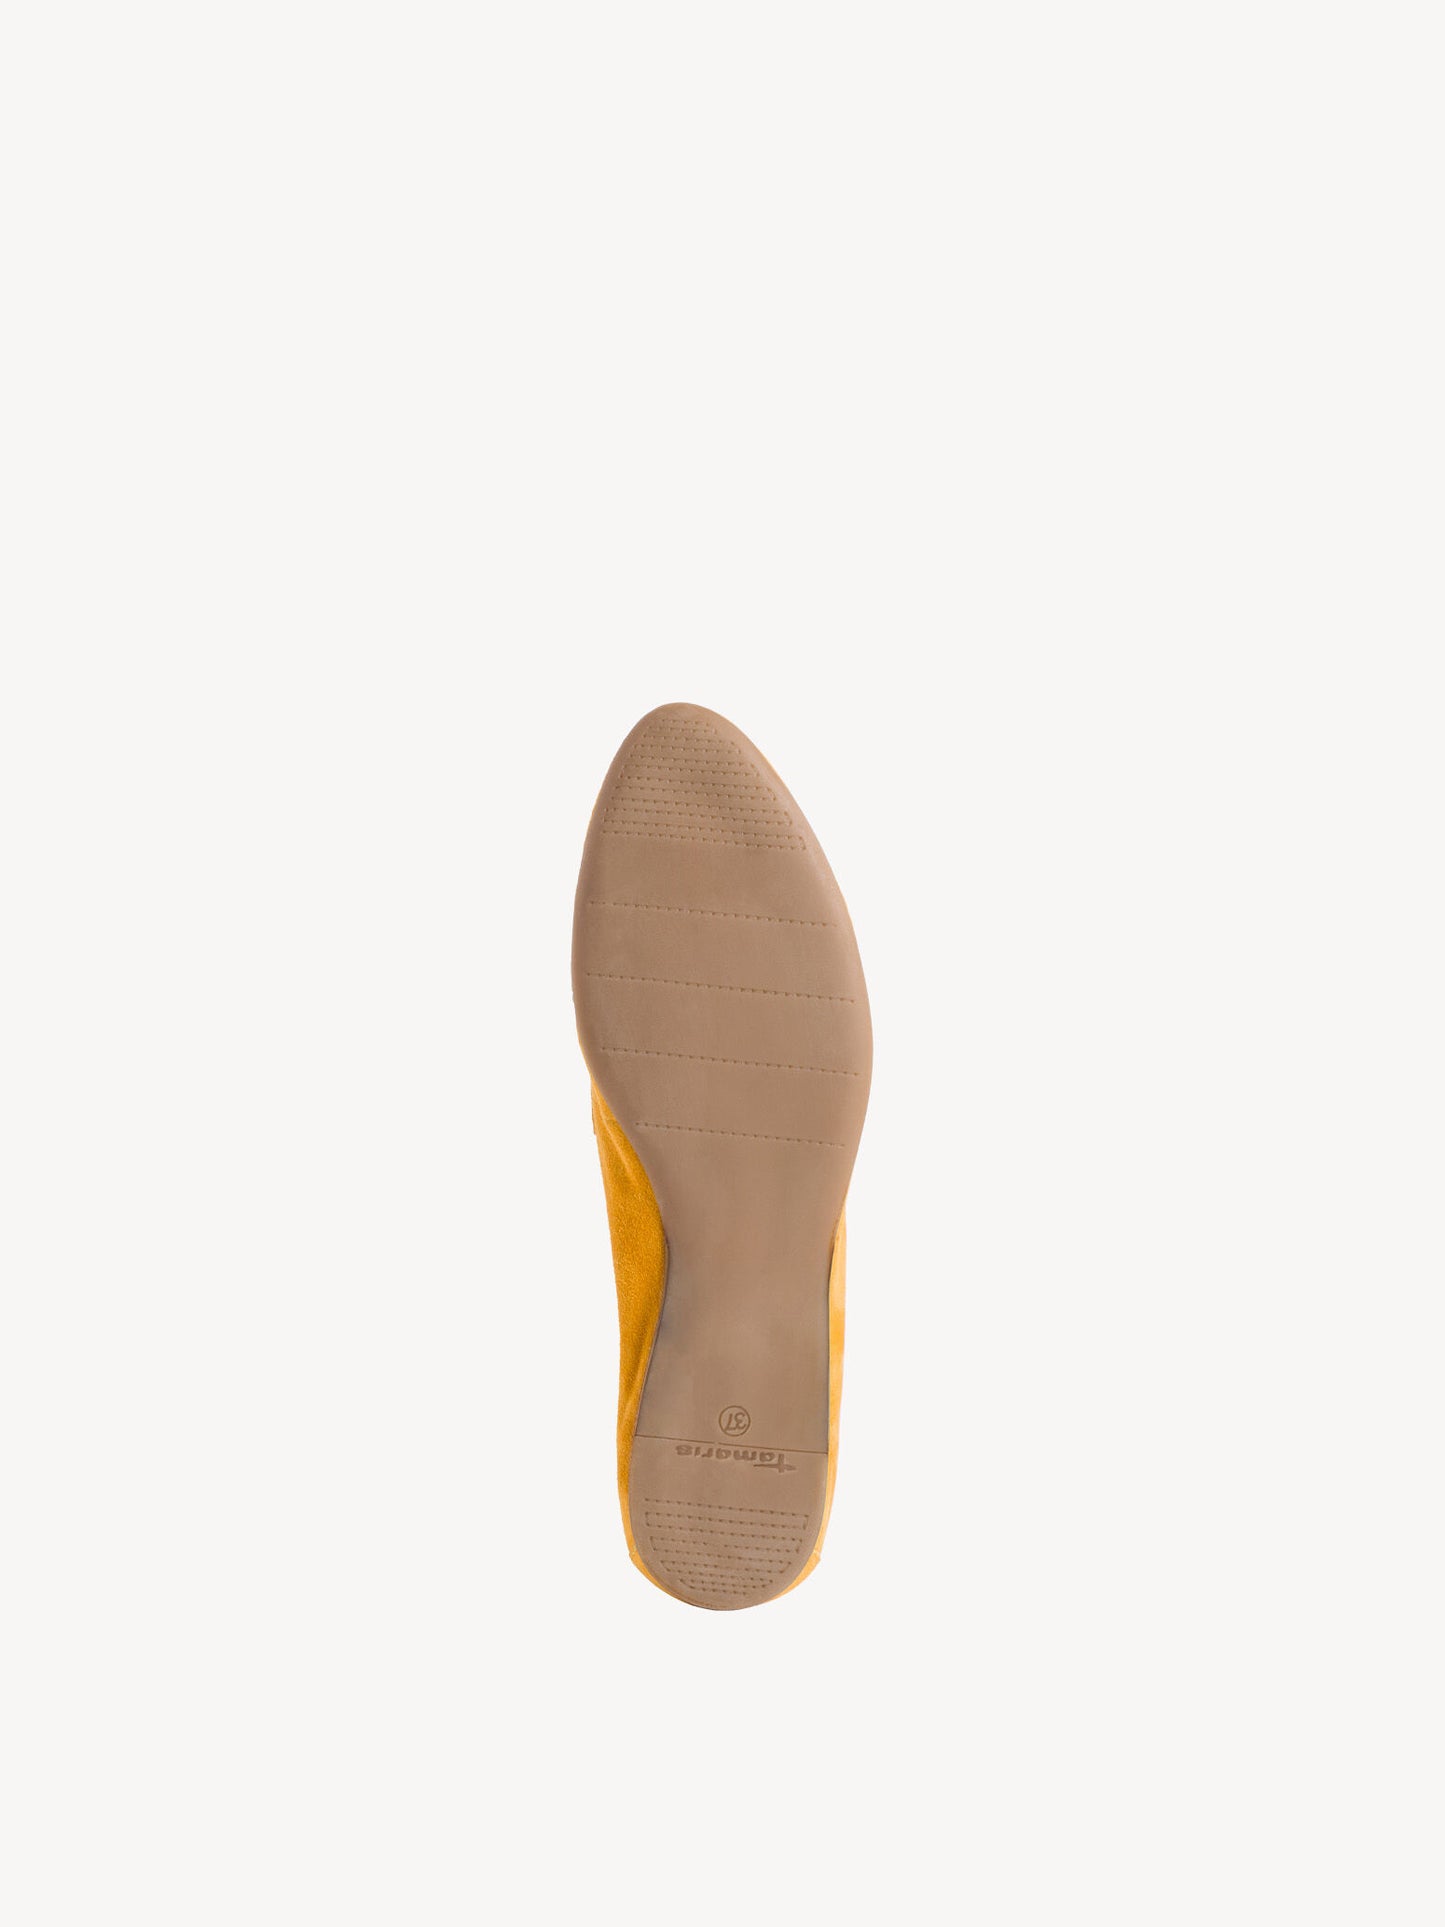 Tamaris Women's 1-24217-26 Leather Moccasin Shoes Mango Yellow